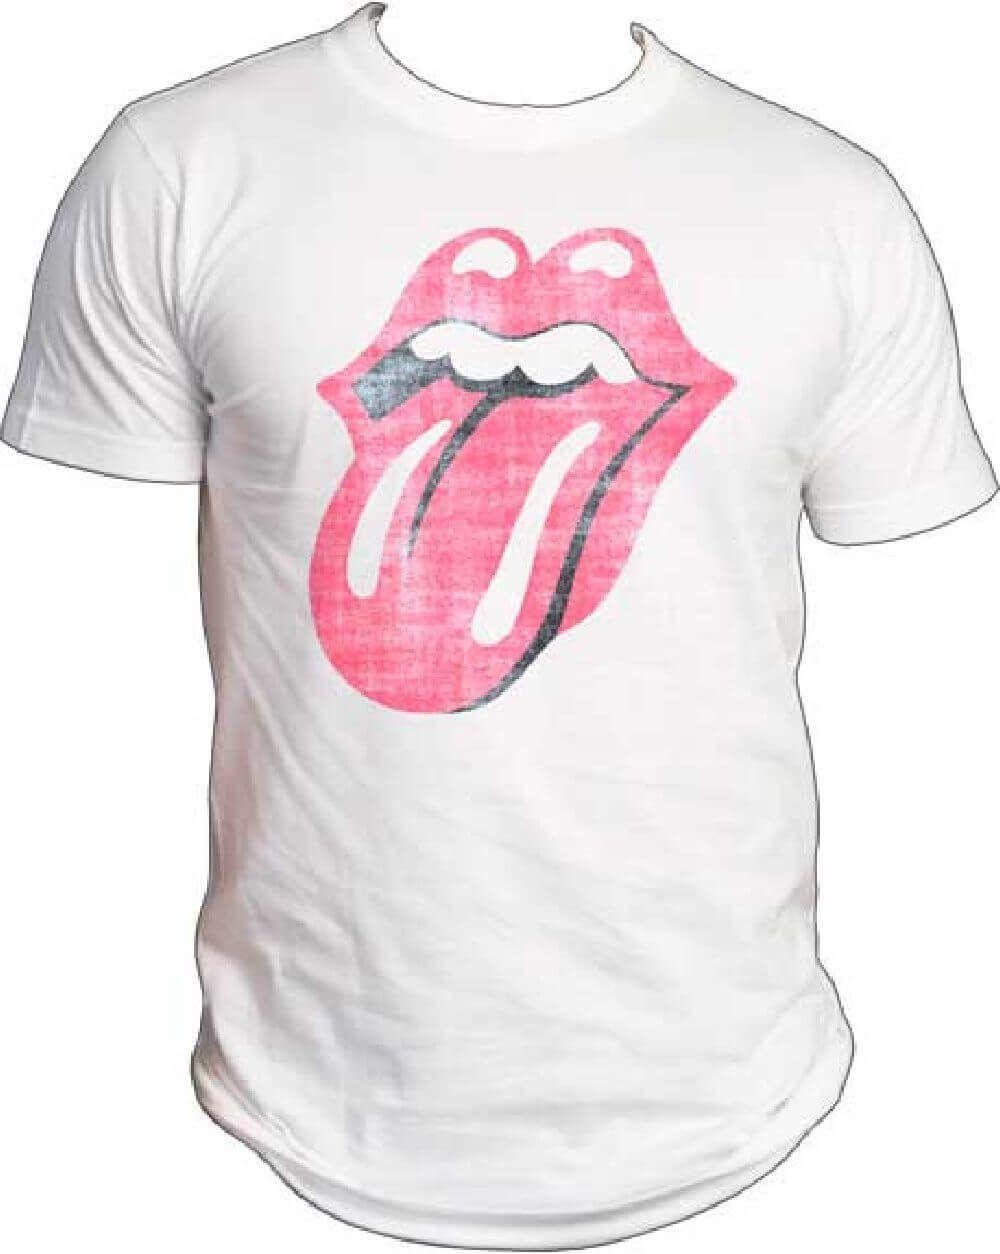 Tongue Logo - Rolling Stones Tongue Logo Men's White Vintage T Shirt